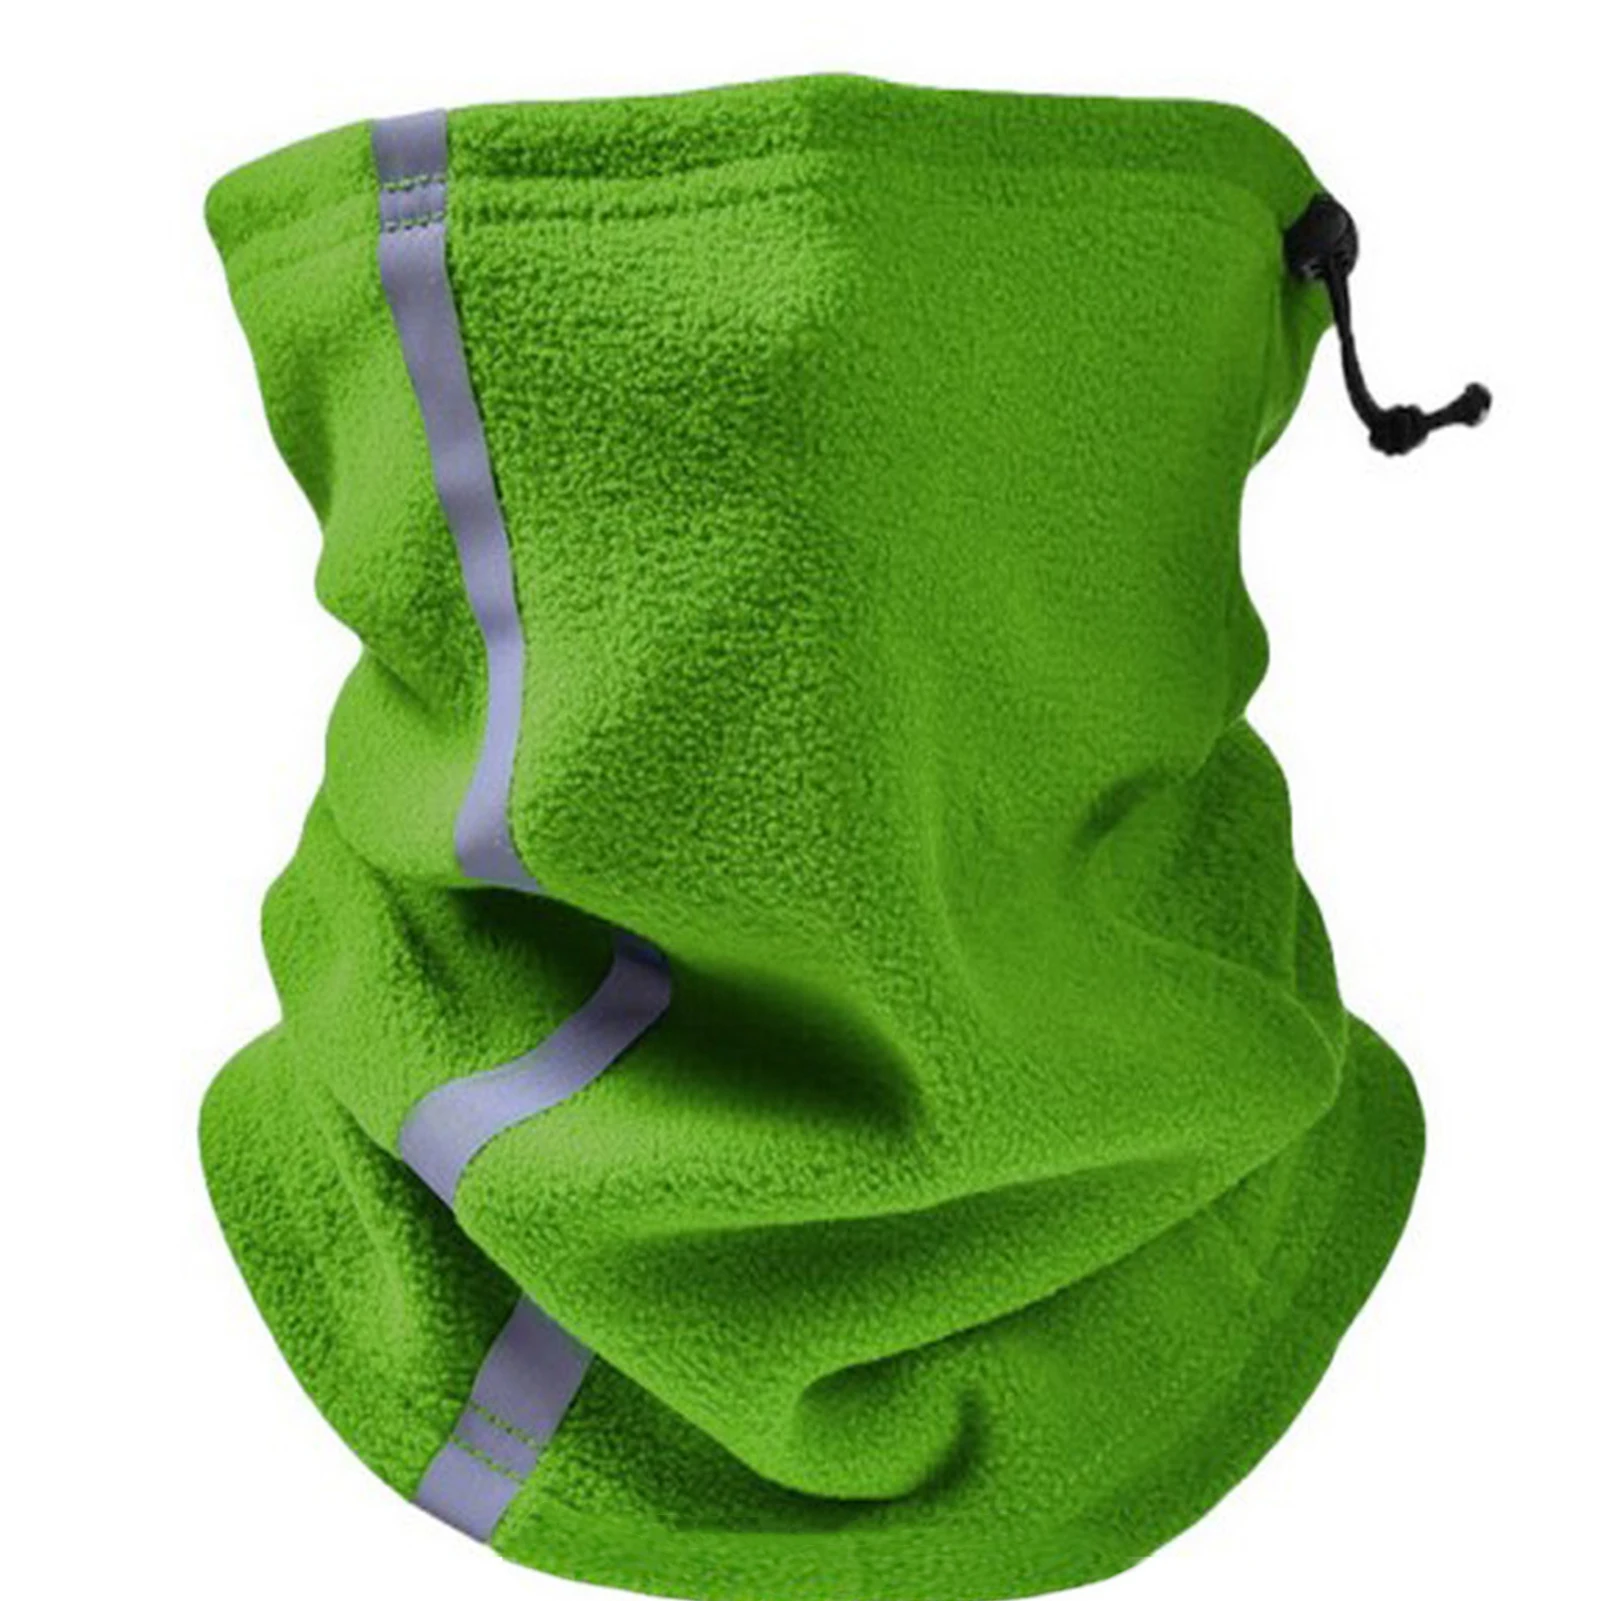 Adjustable Fleece Neck Gaiter Warmer Reflective Safety Face Cover D1R2 